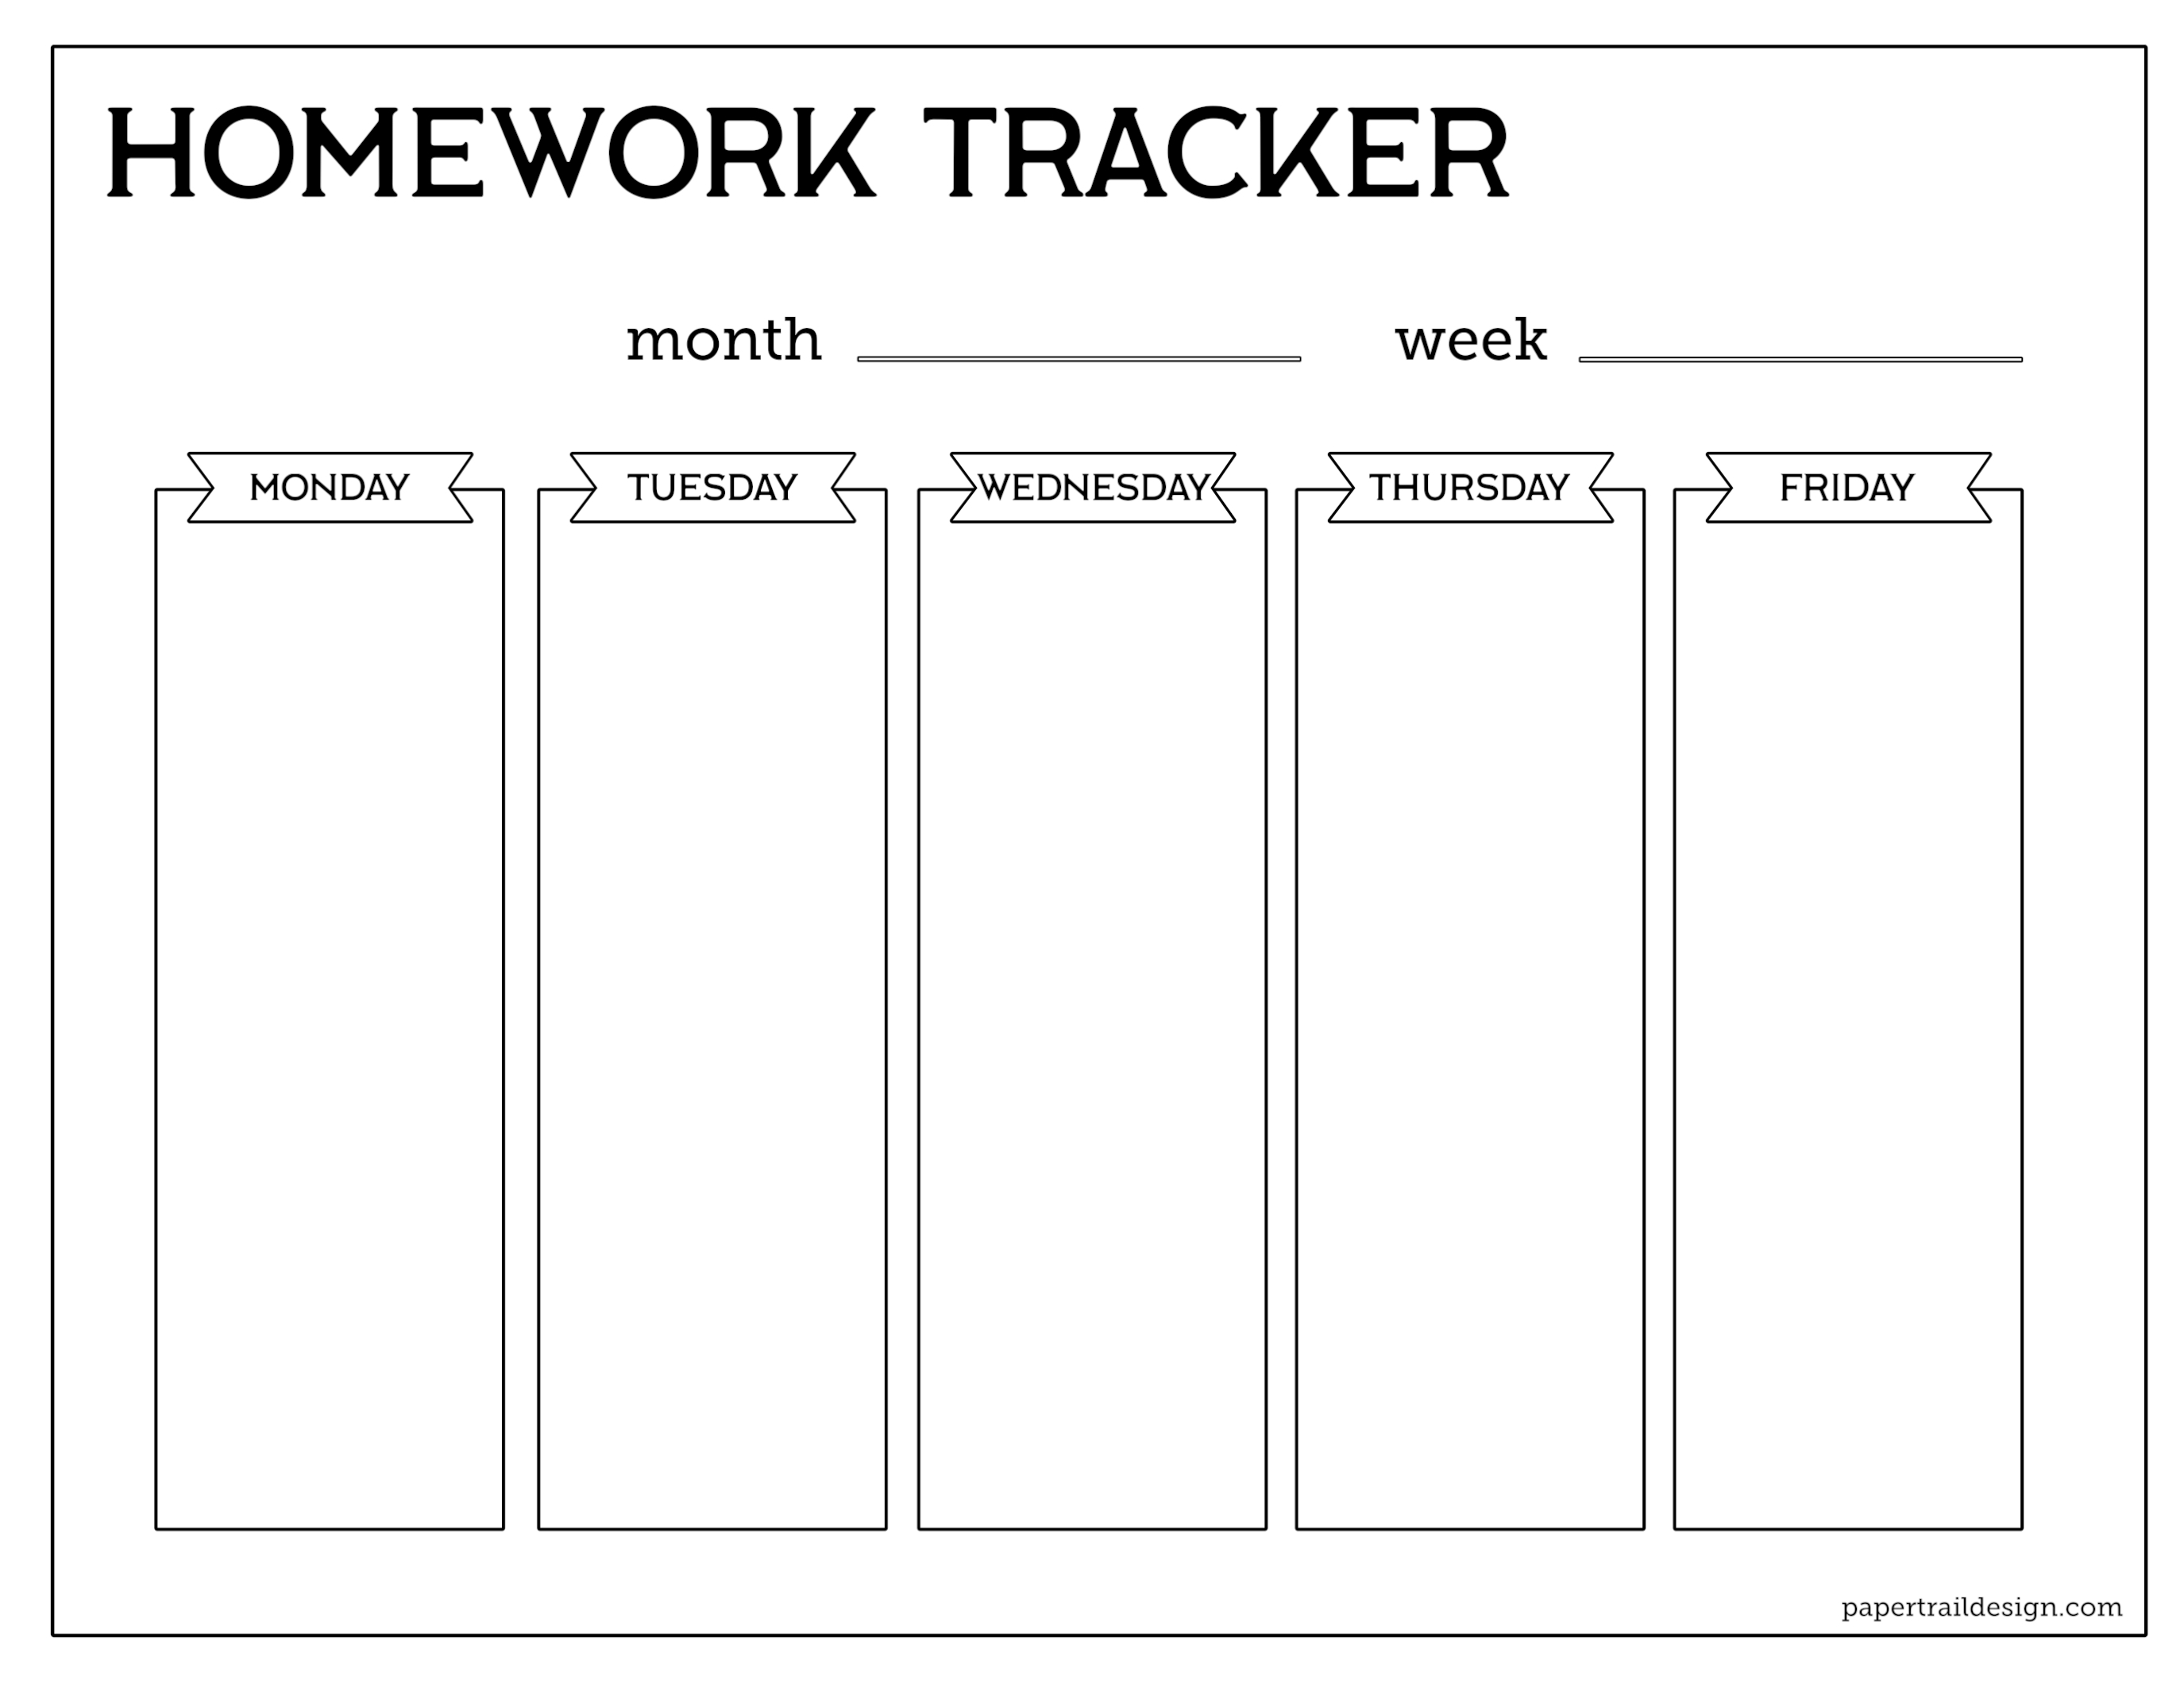 free-printable-student-homework-planner-template-paper-trail-design